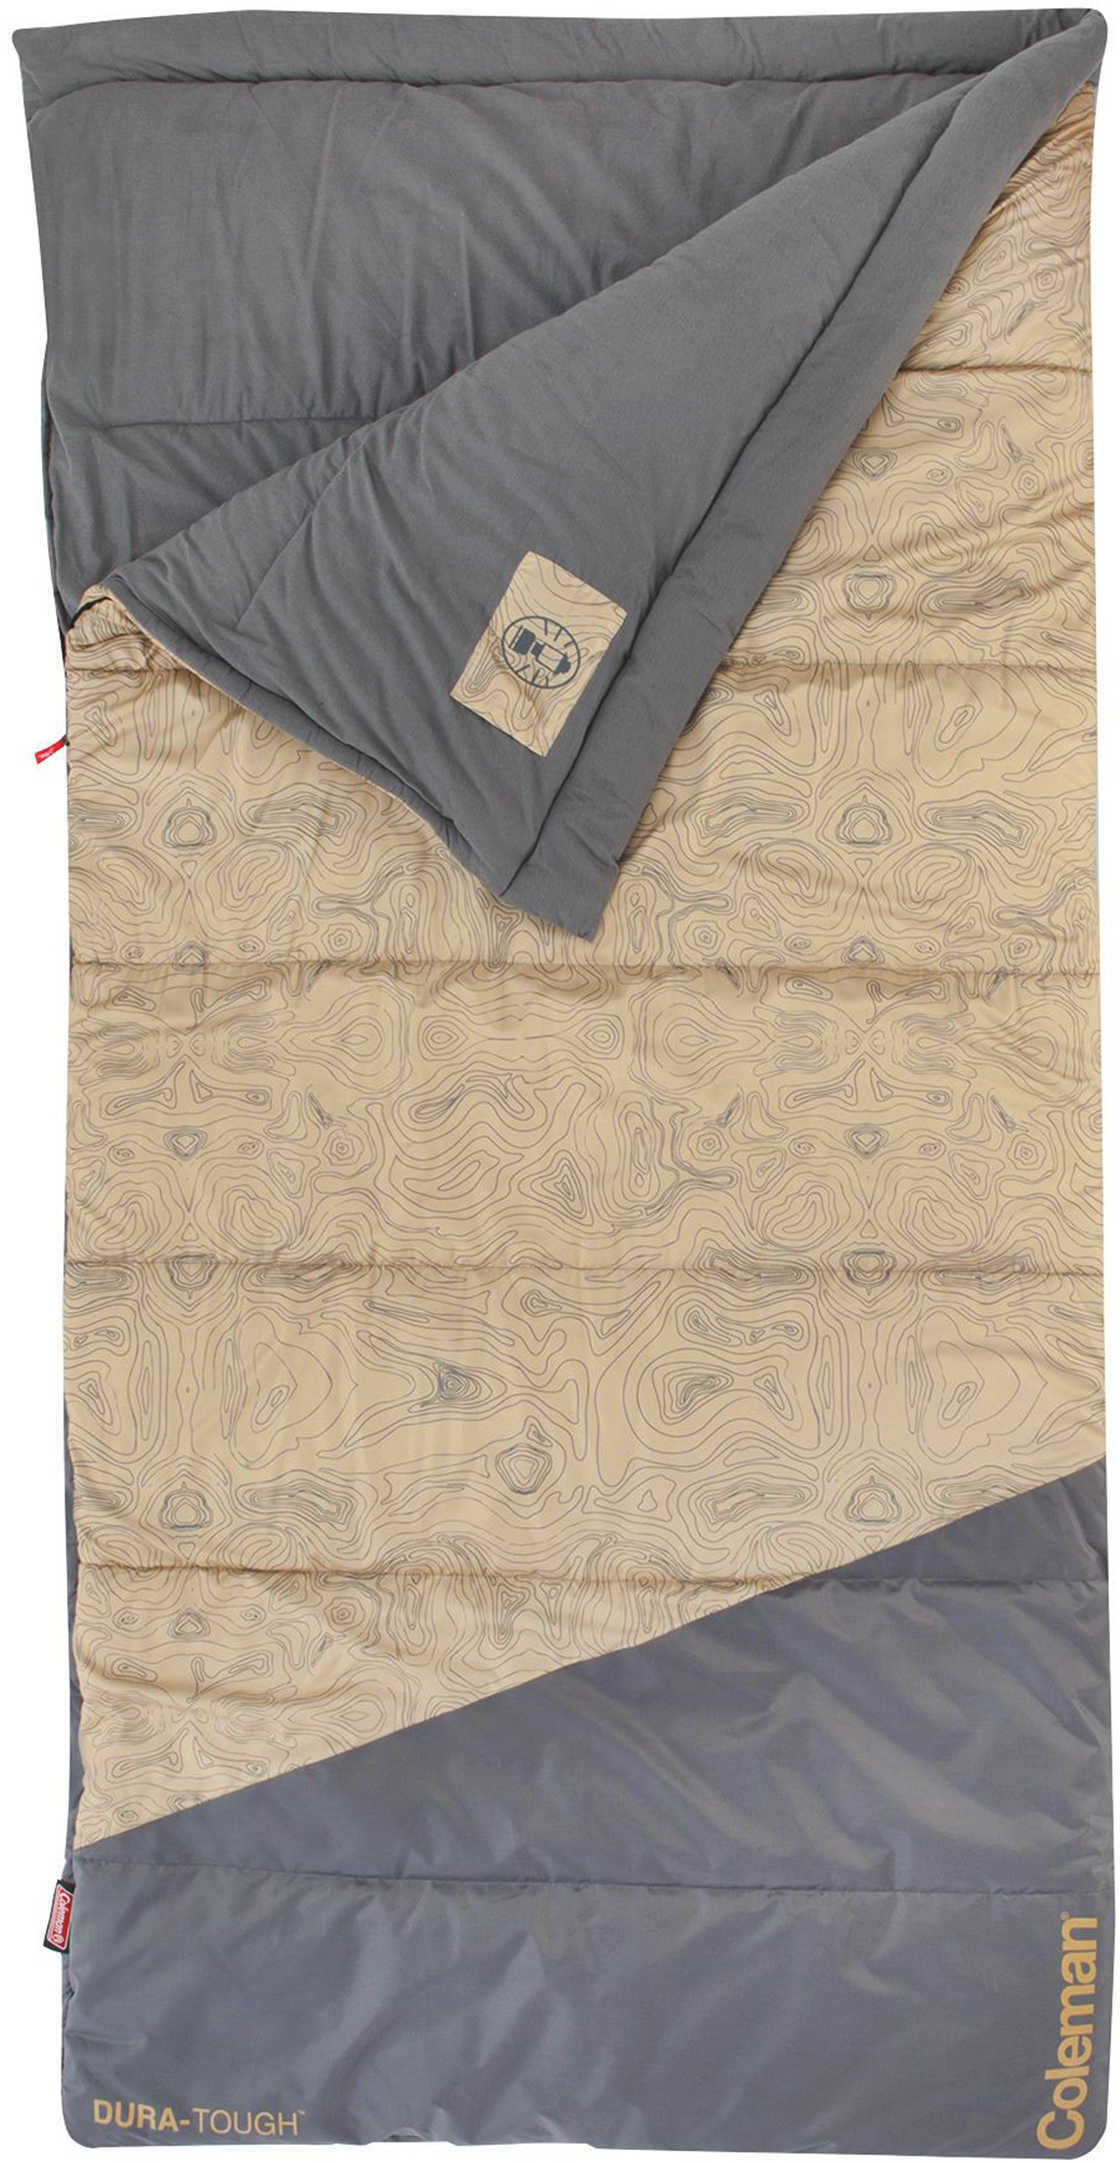 Coleman Sleeping Bag, Rectangular Big N Tall, 30 °F Md: 2000025731